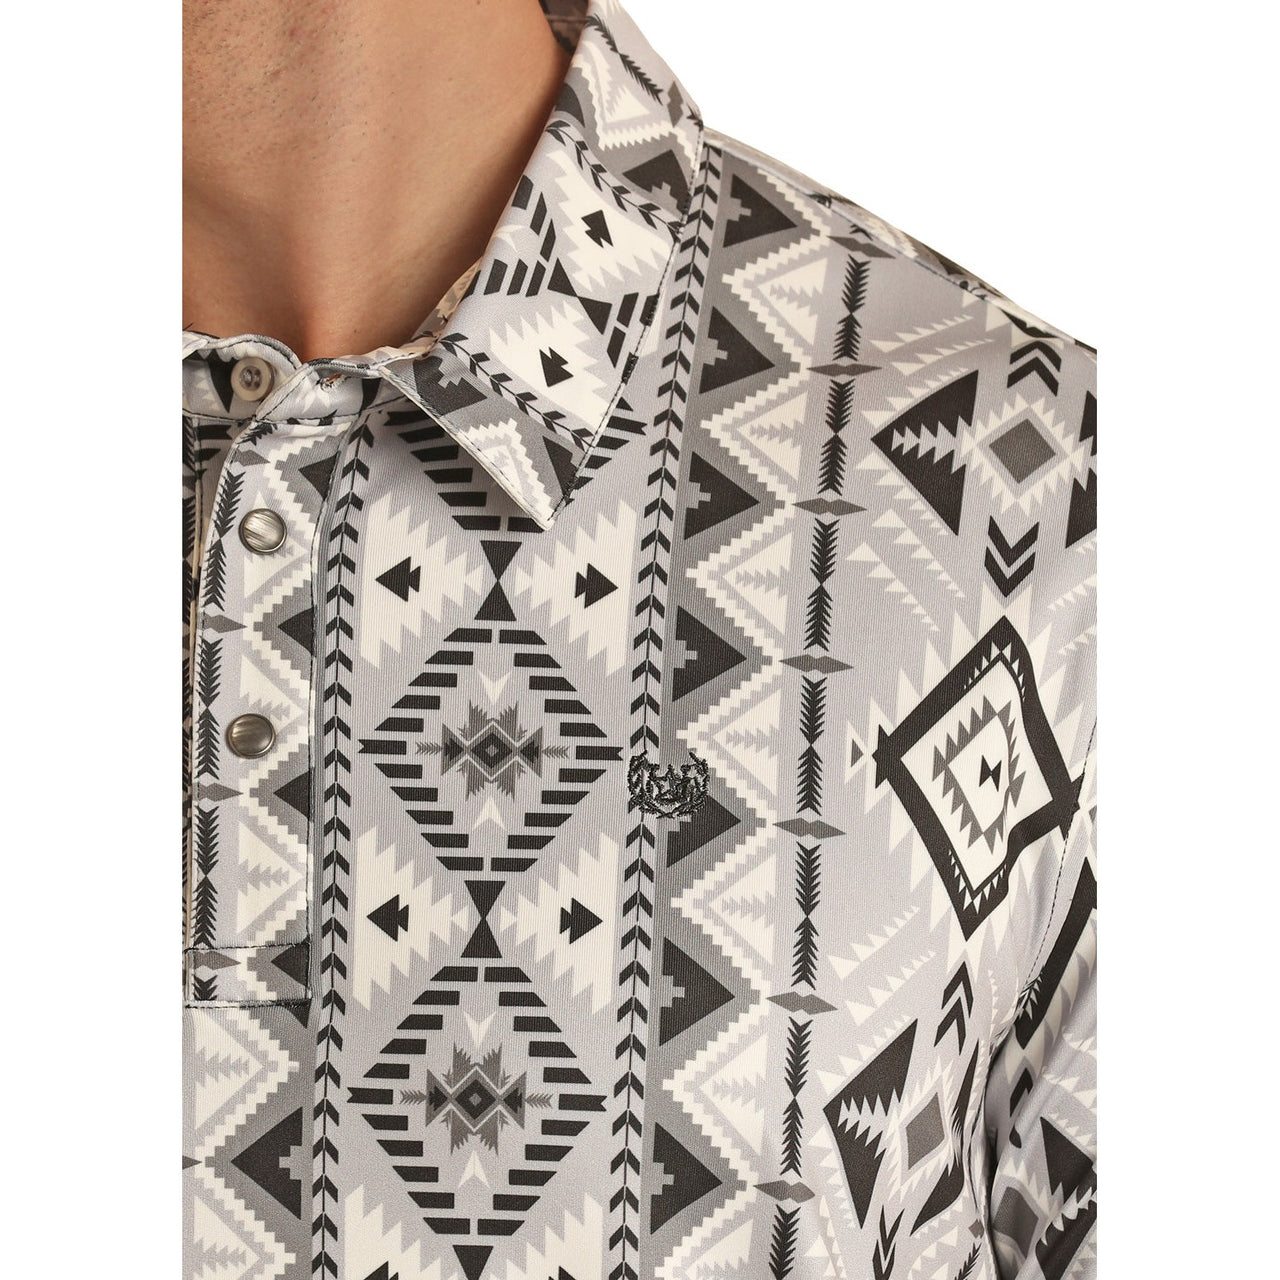 Panhandle Performance Men's Aztec Stripe Knit Polo Snap Shirt -